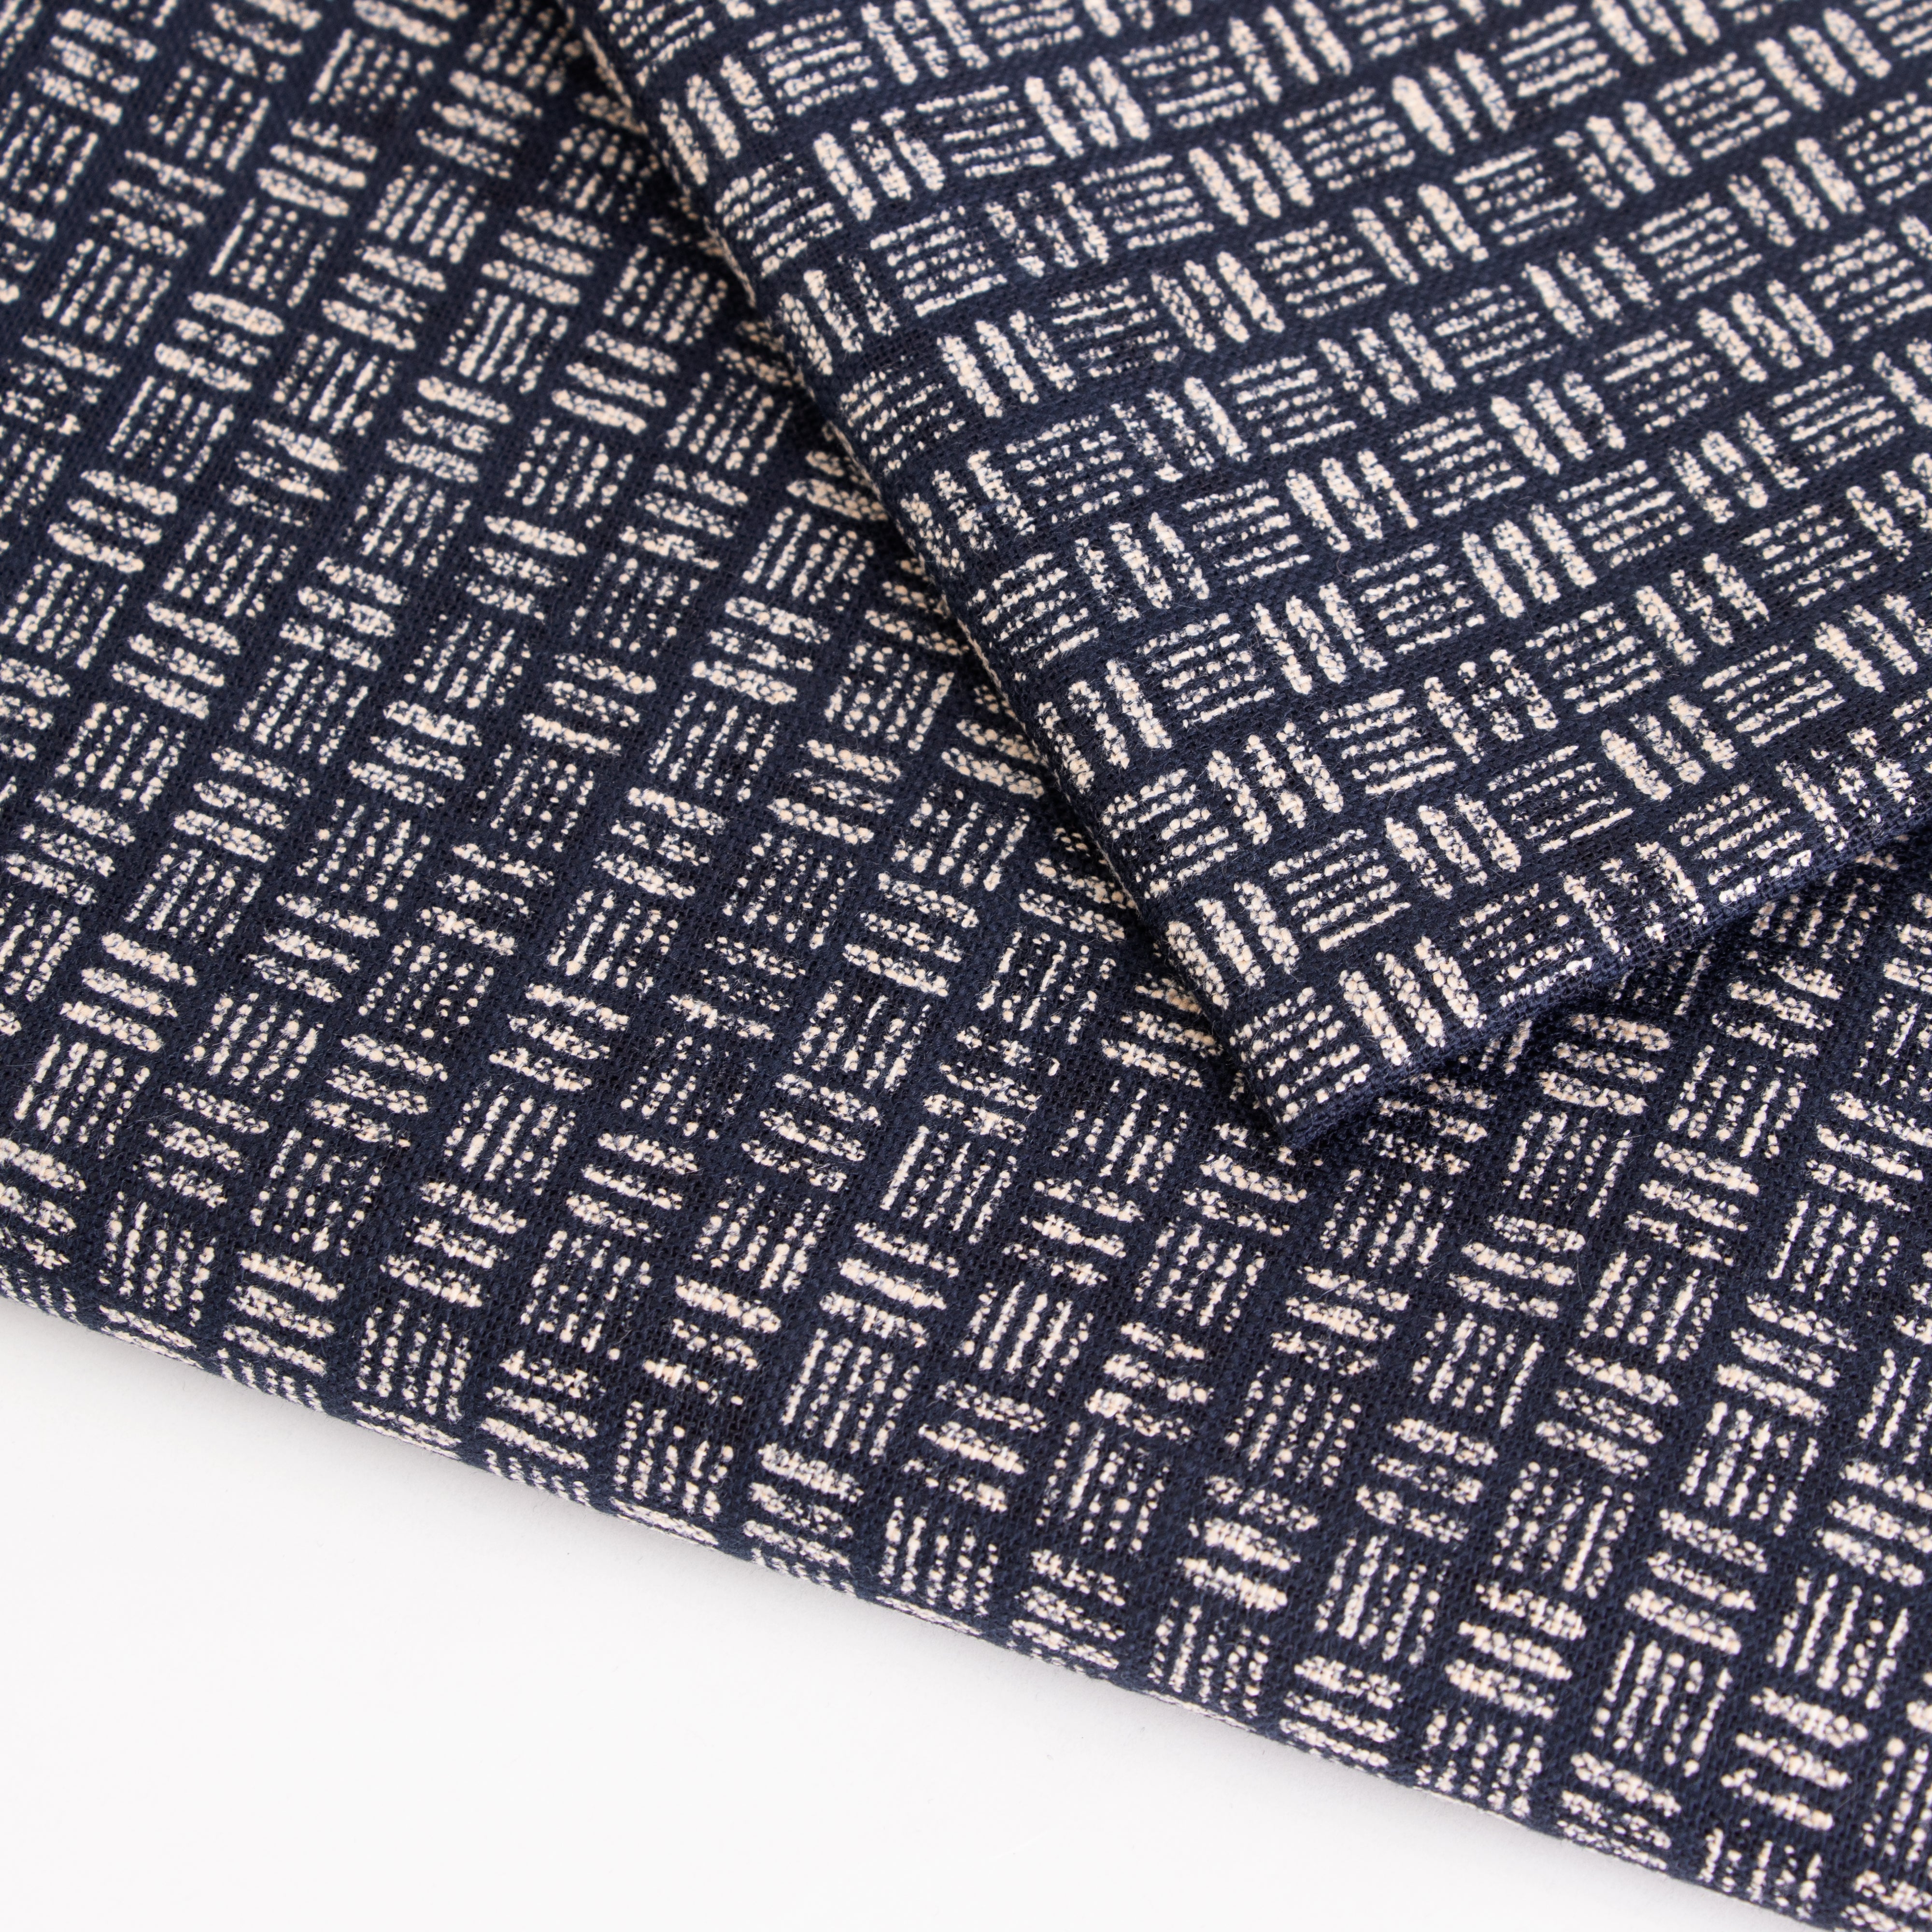 Japanese Cotton Uneven Yarns Sheeting Print - Indigo Basket Weave